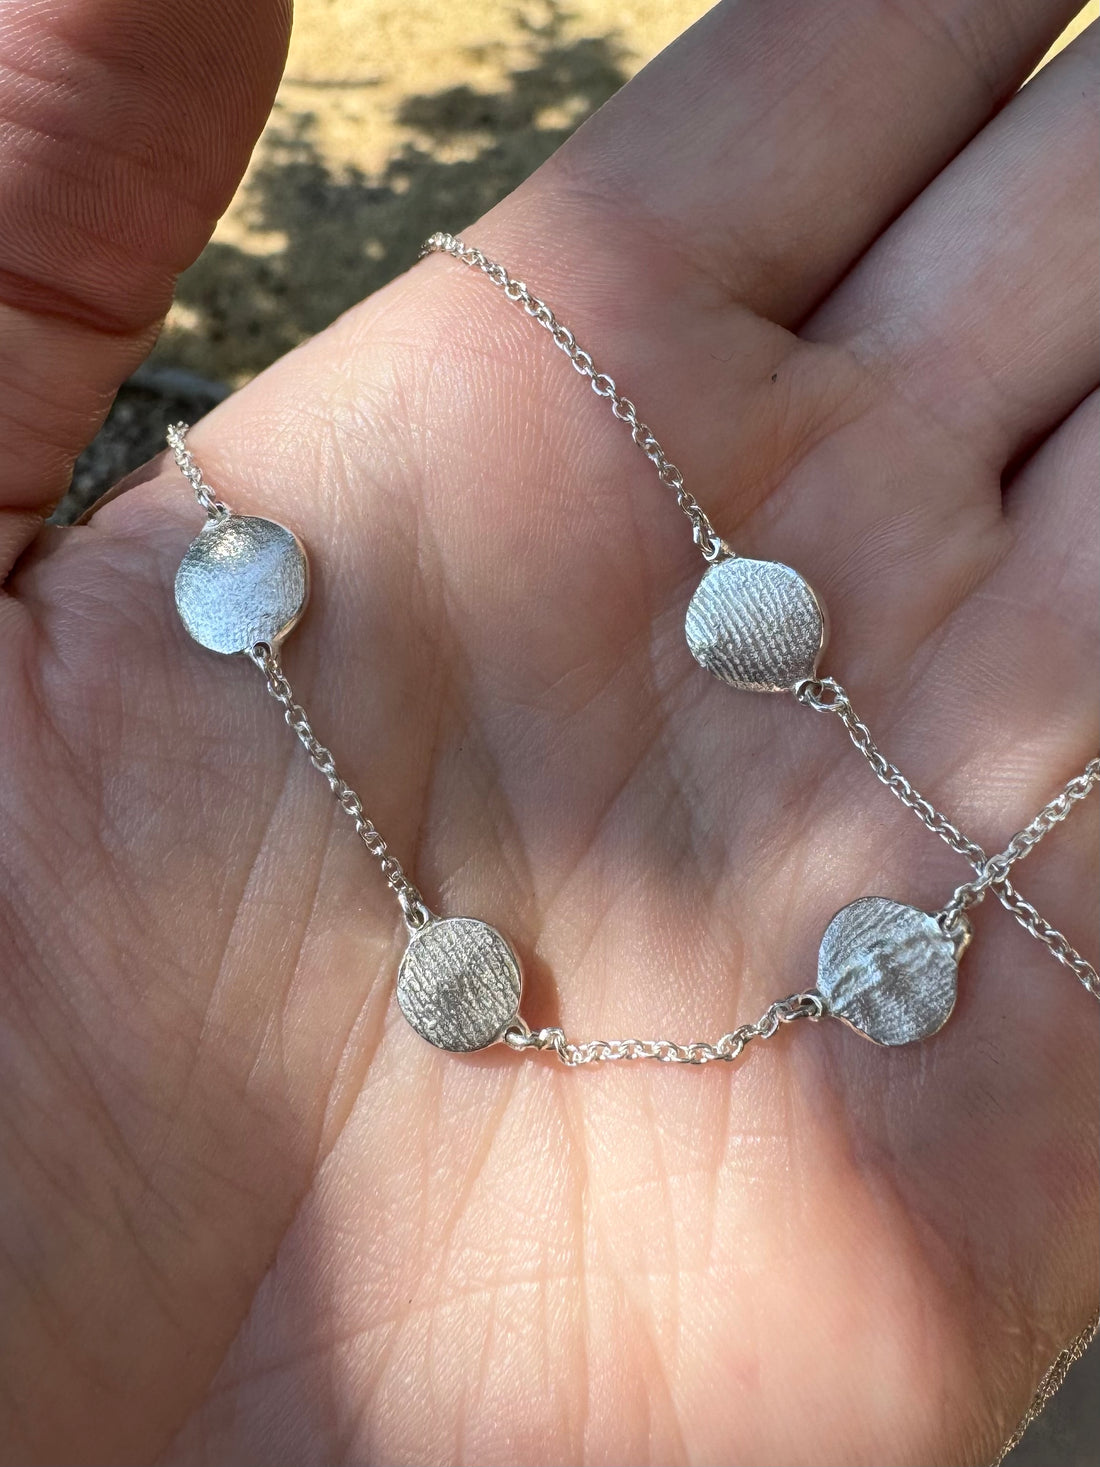 X-Mini Fingerprint Necklace - Sterling Silver